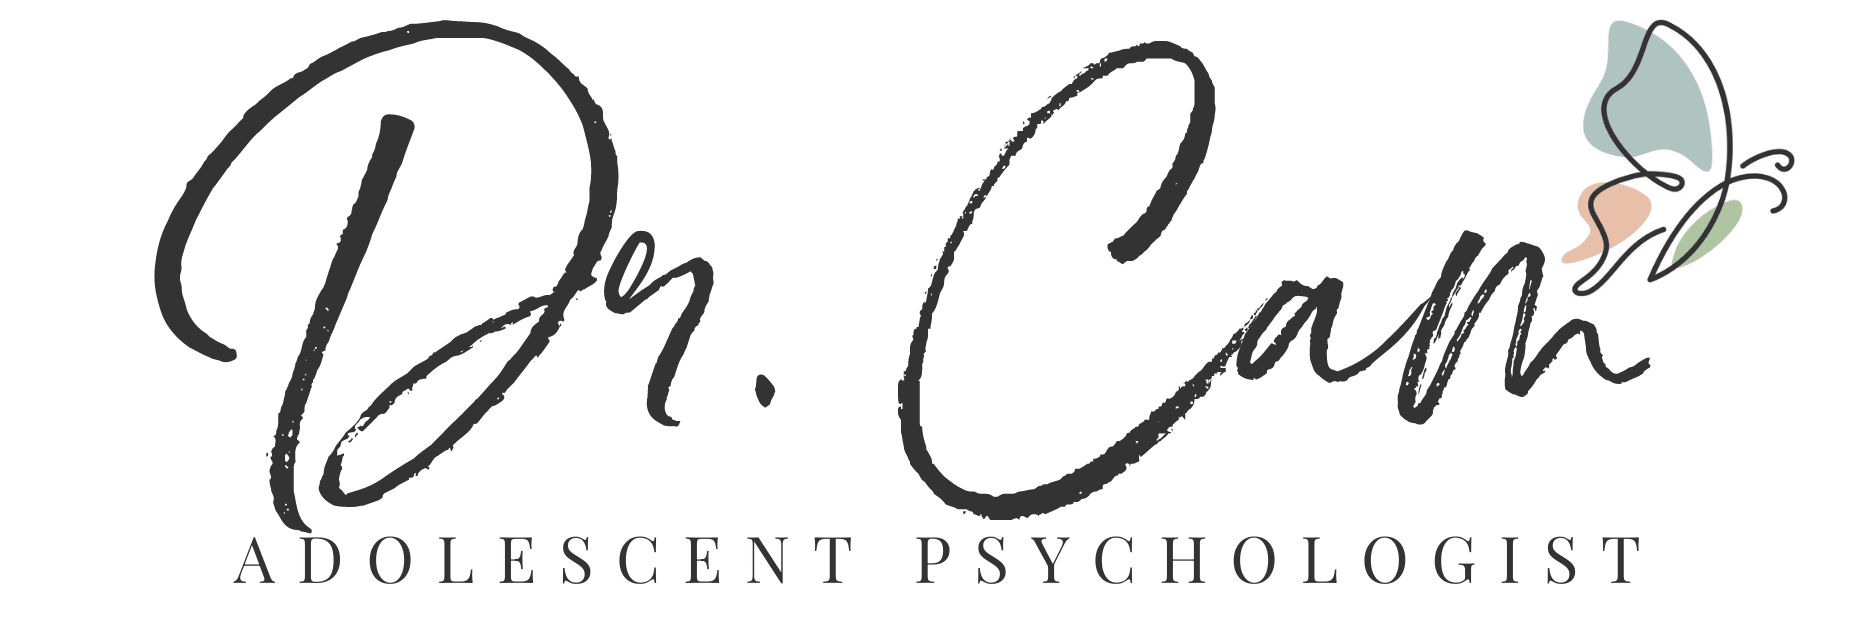 Parenting teens with Dr. Cam logo